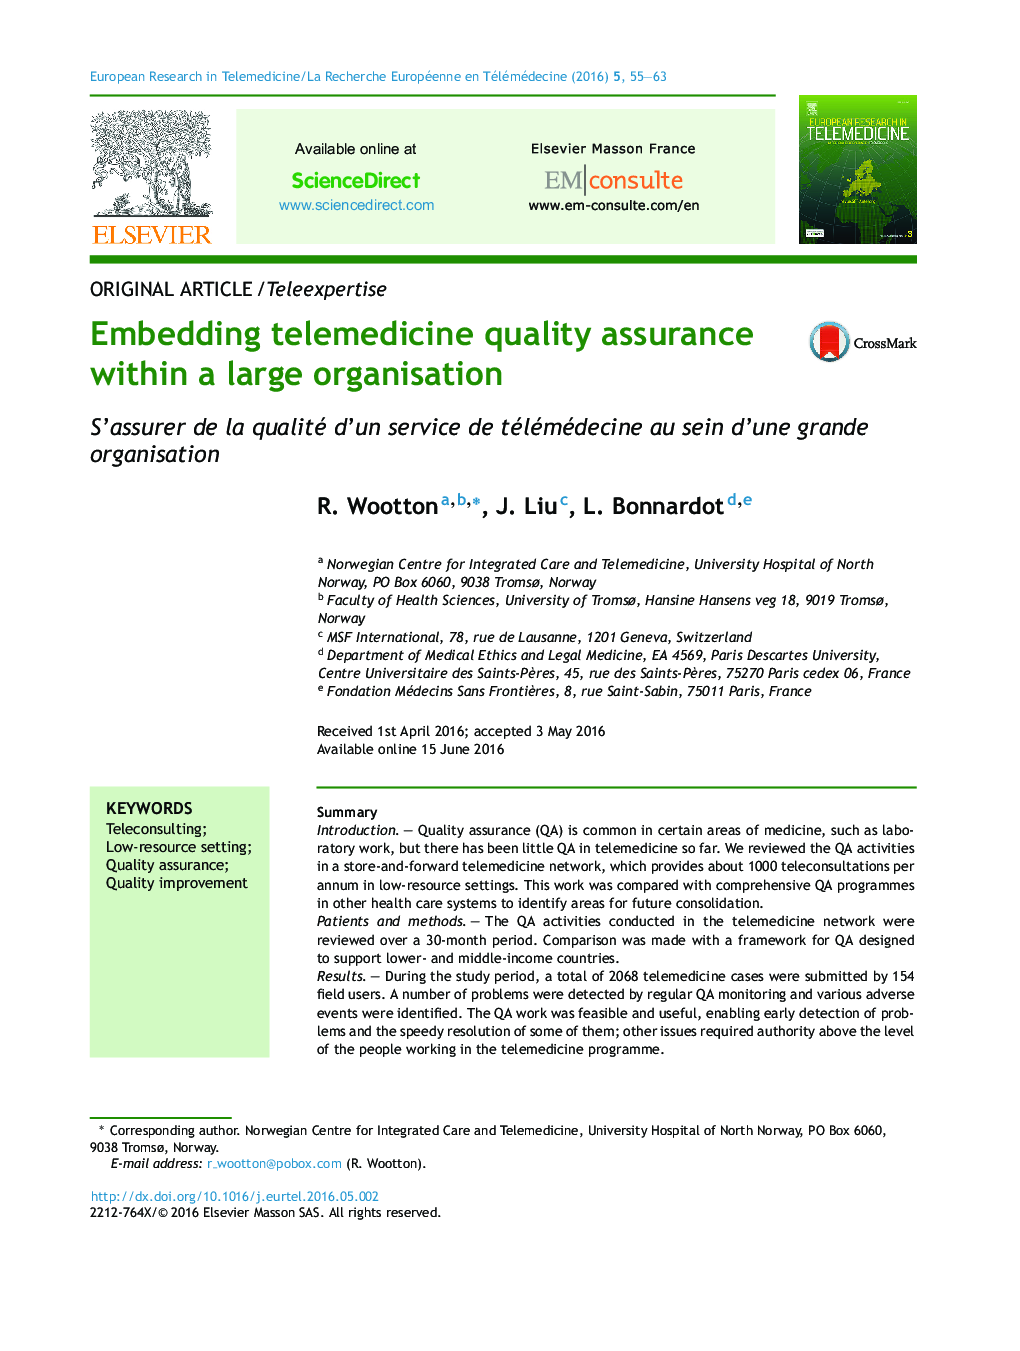 Embedding telemedicine quality assurance within a large organisation